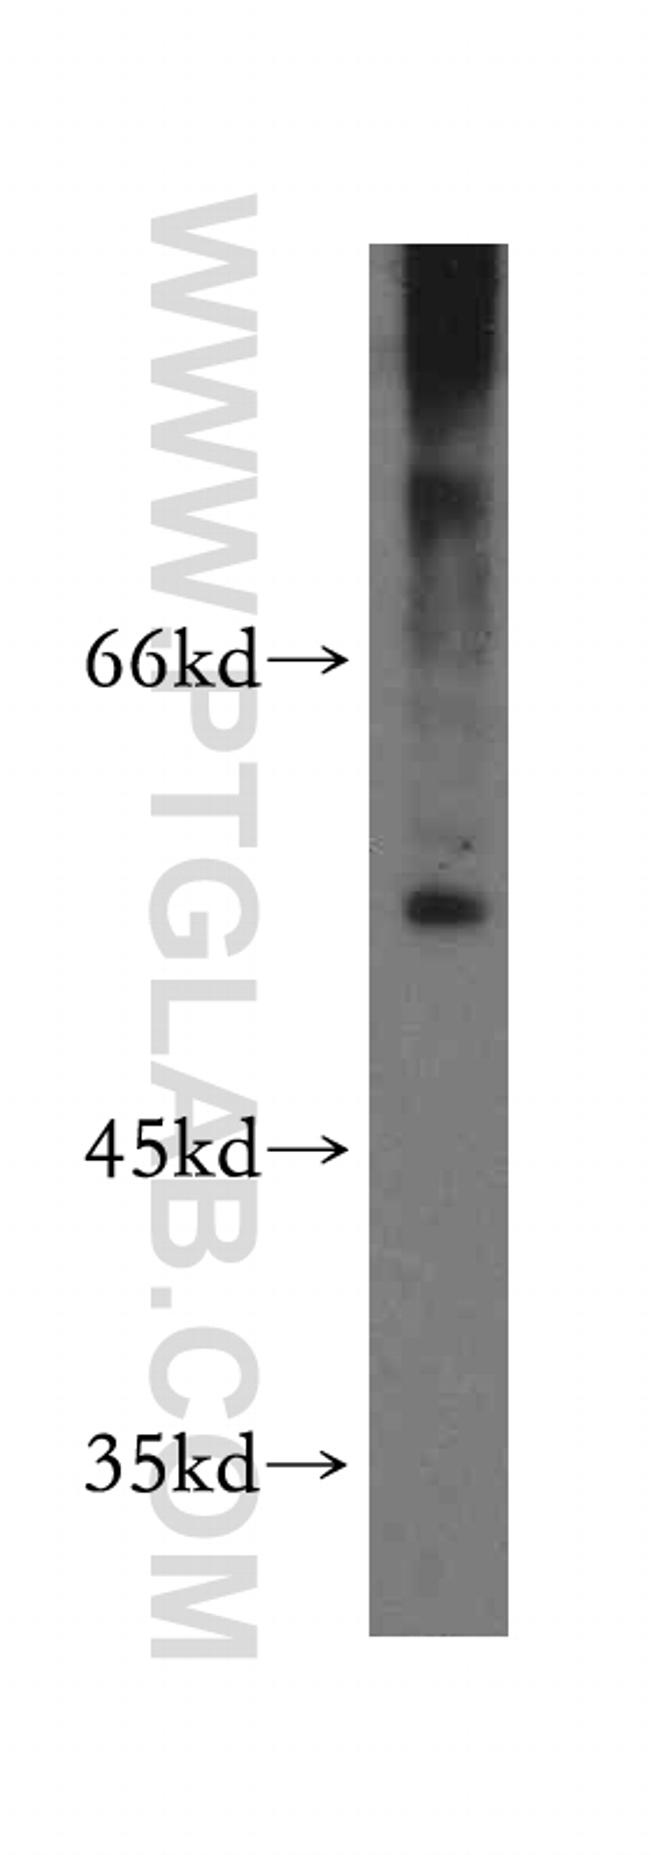 FKBP8 Antibody in Western Blot (WB)